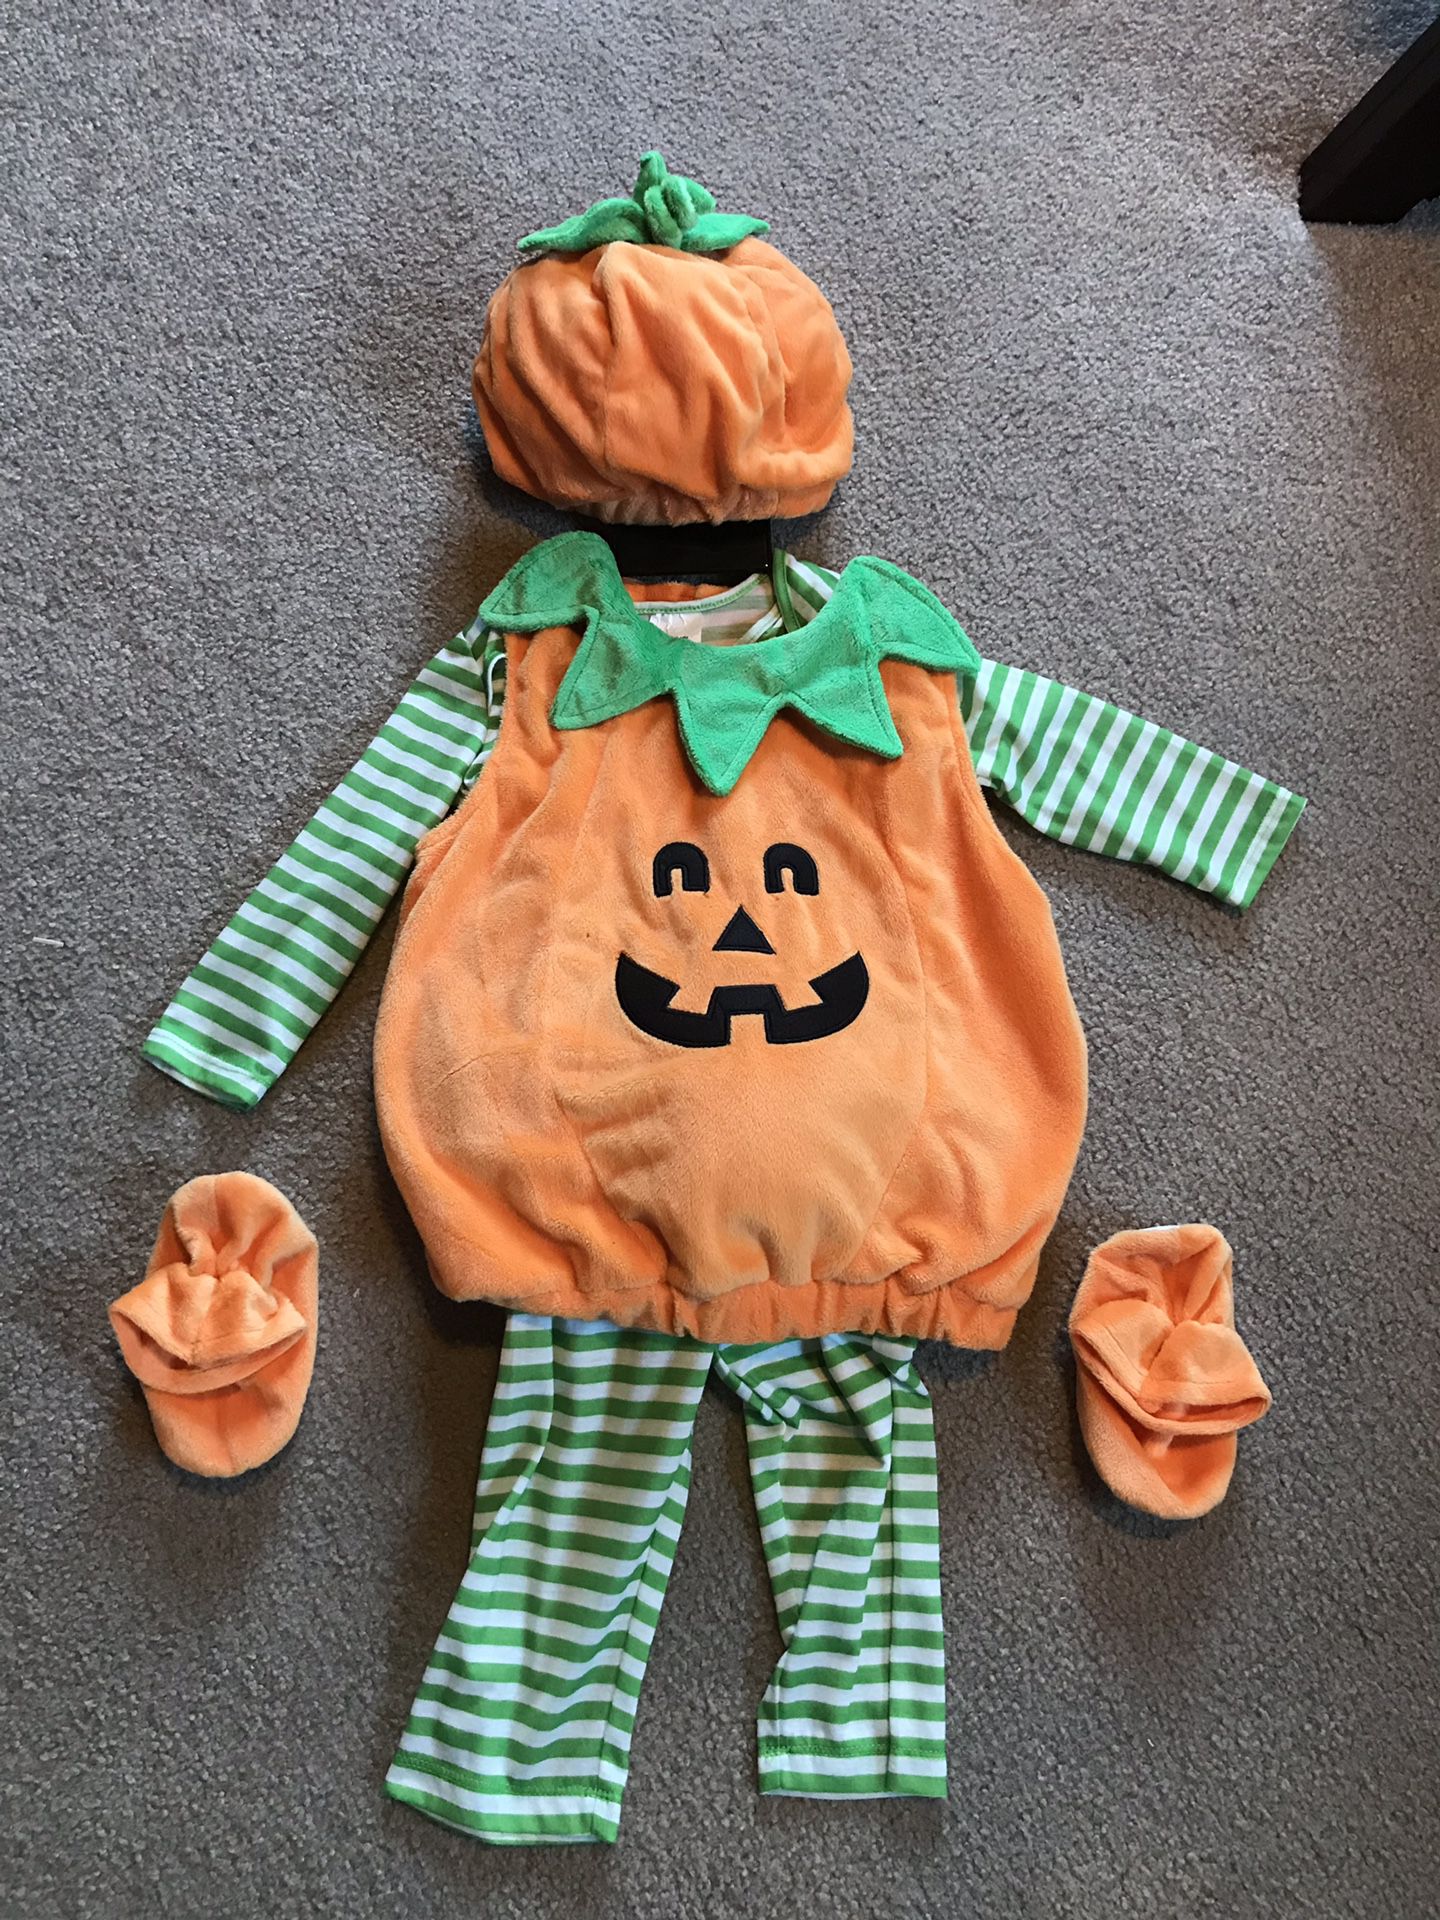 Baby pumpkin costume, size 12-18 month